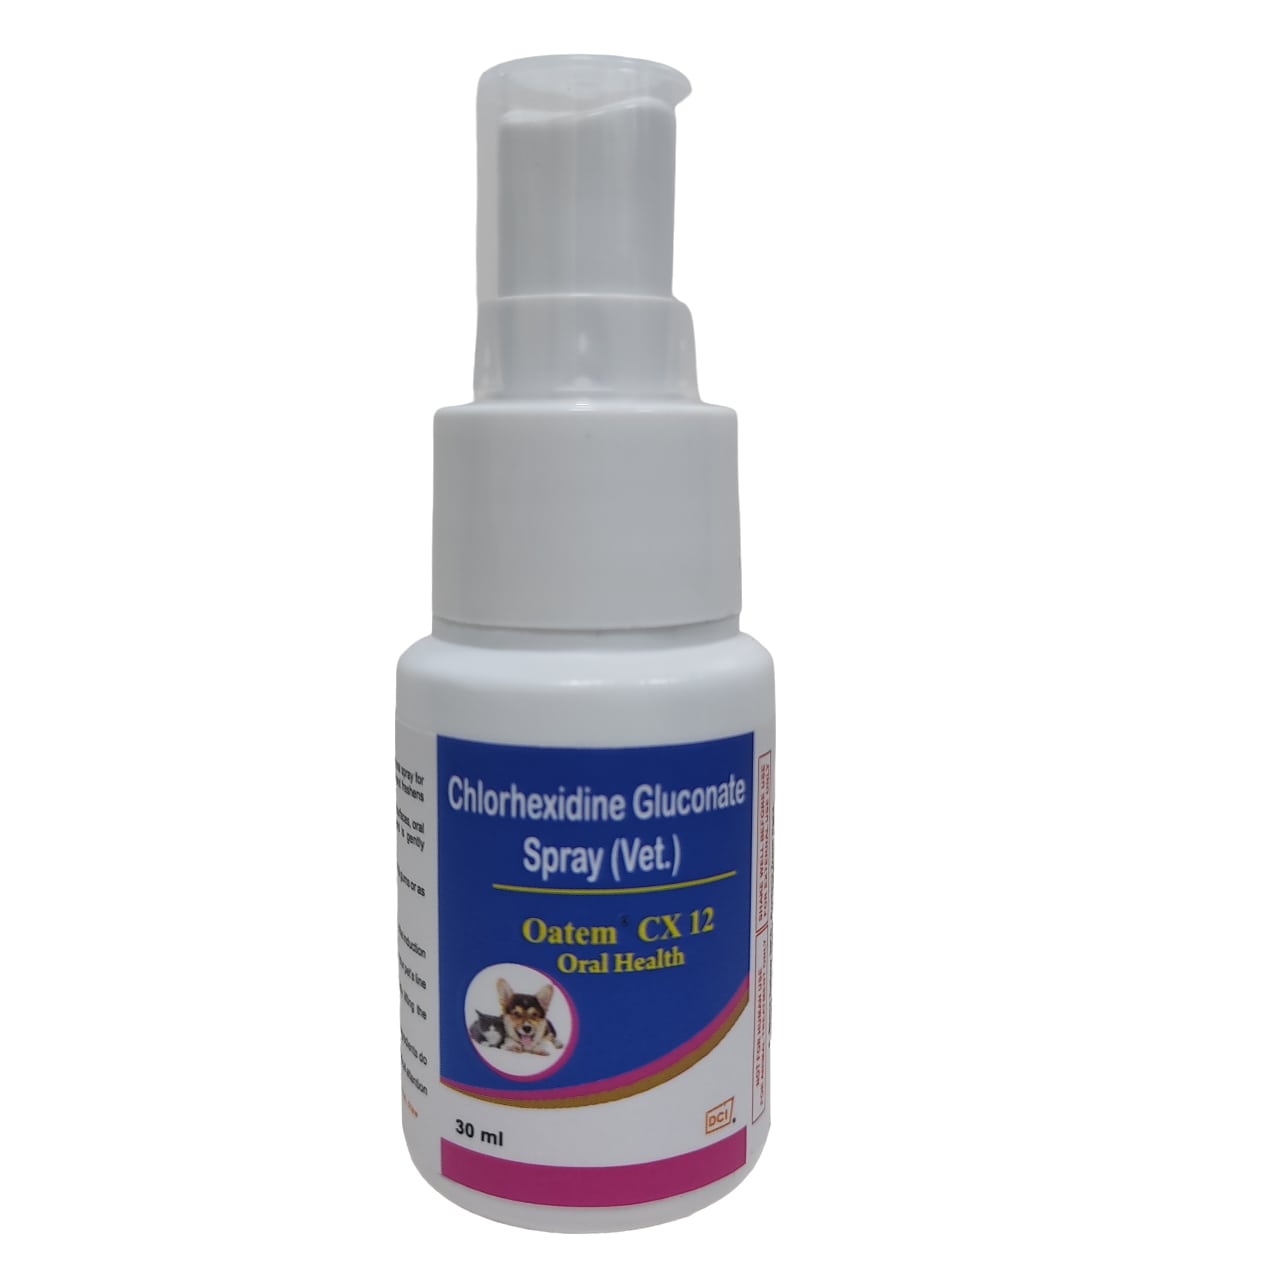 Oatem CX 12 Oral Health Pet Mouth Spray, 30 ml